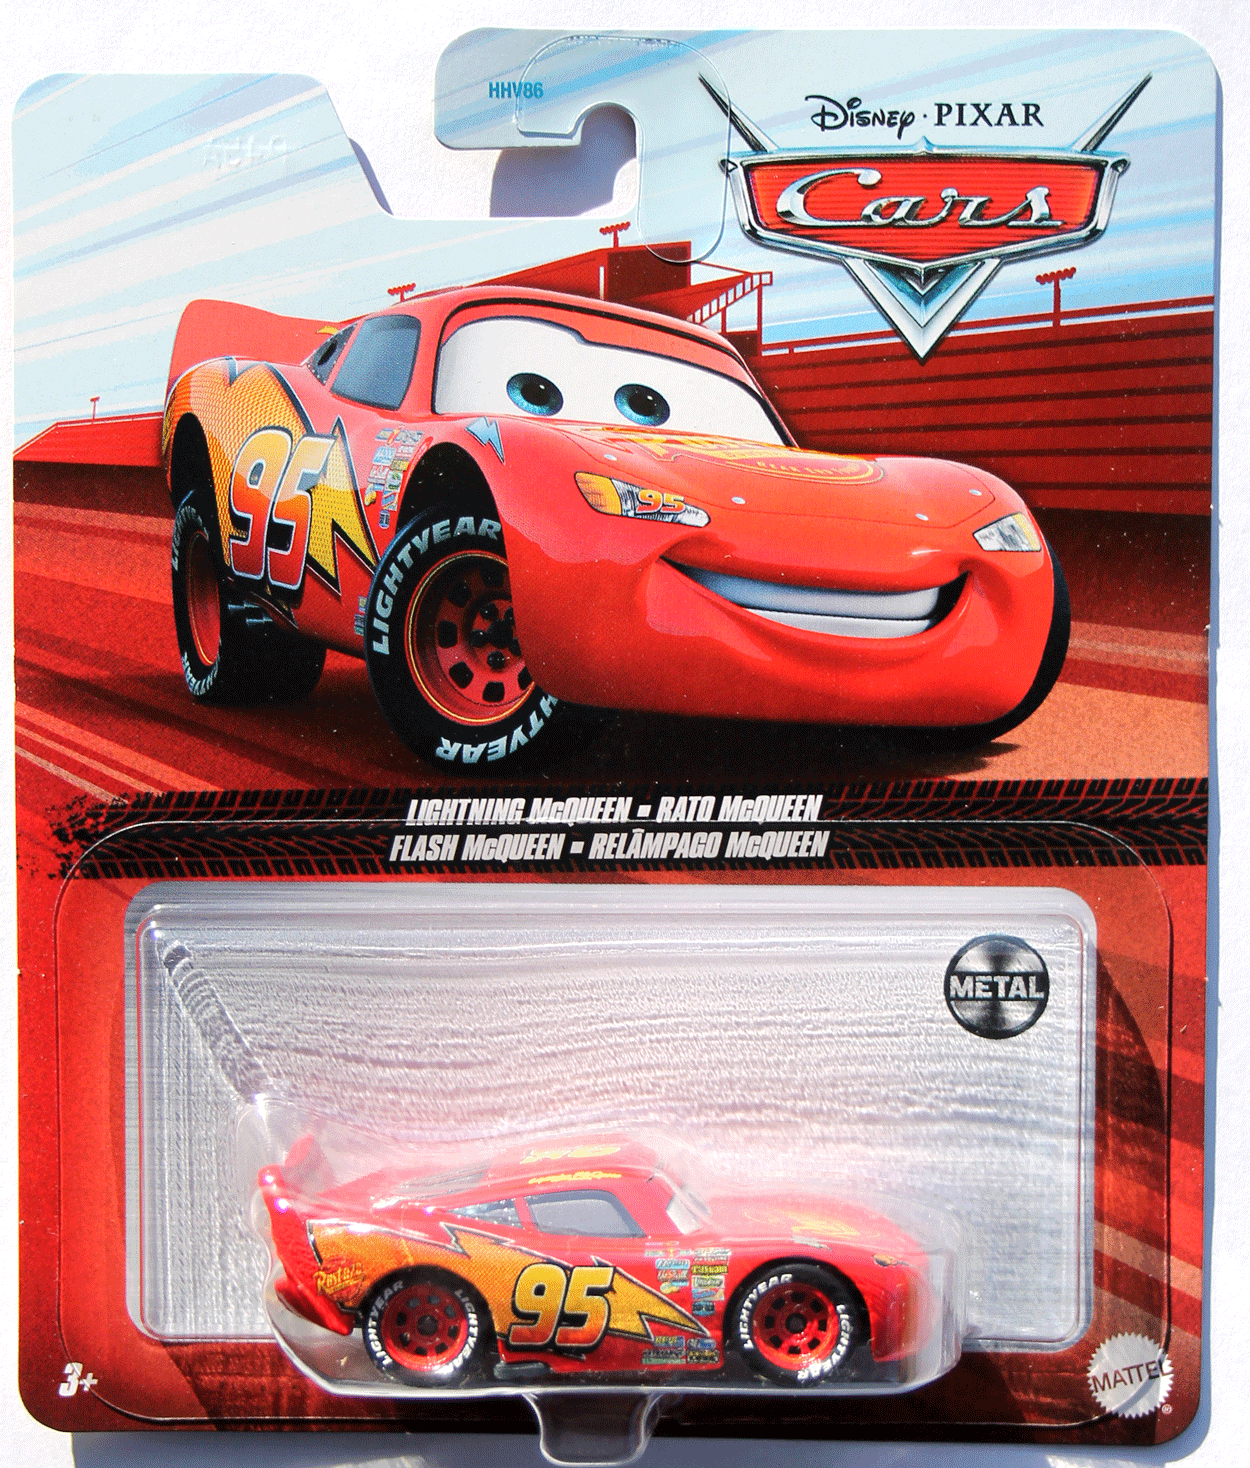 Disney Pixar Cars 2022 Cars 1 Lightning McQueen Metal